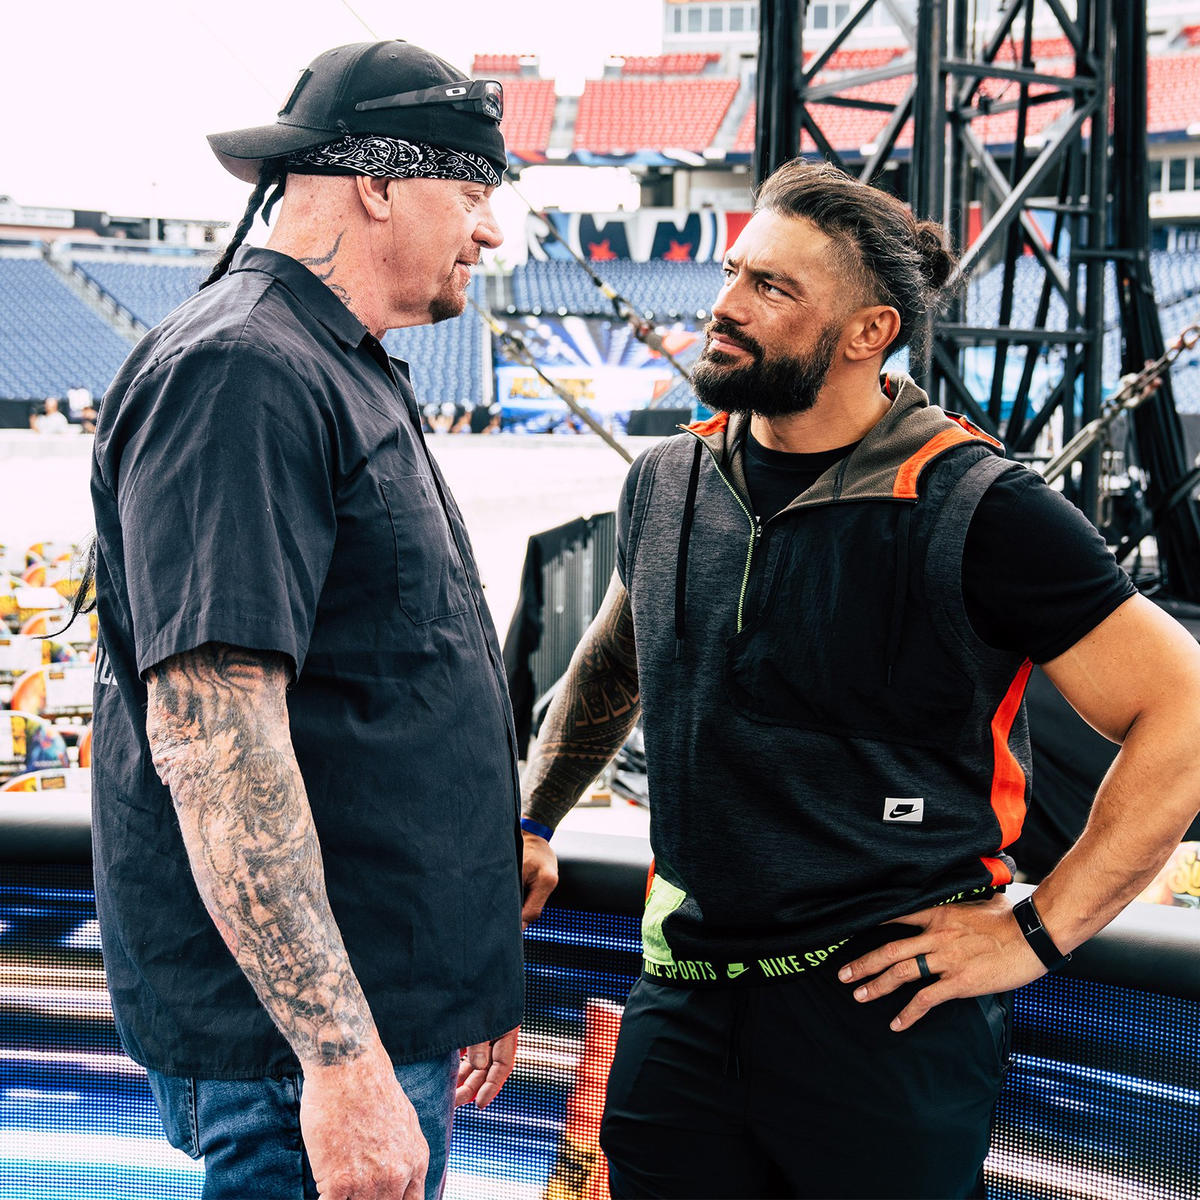 The Big Dogs in conversation! 

@undertaker @WWERomanReigns @HeymanHustle #SummerSlam https://t.co/z5HIhXWfXk